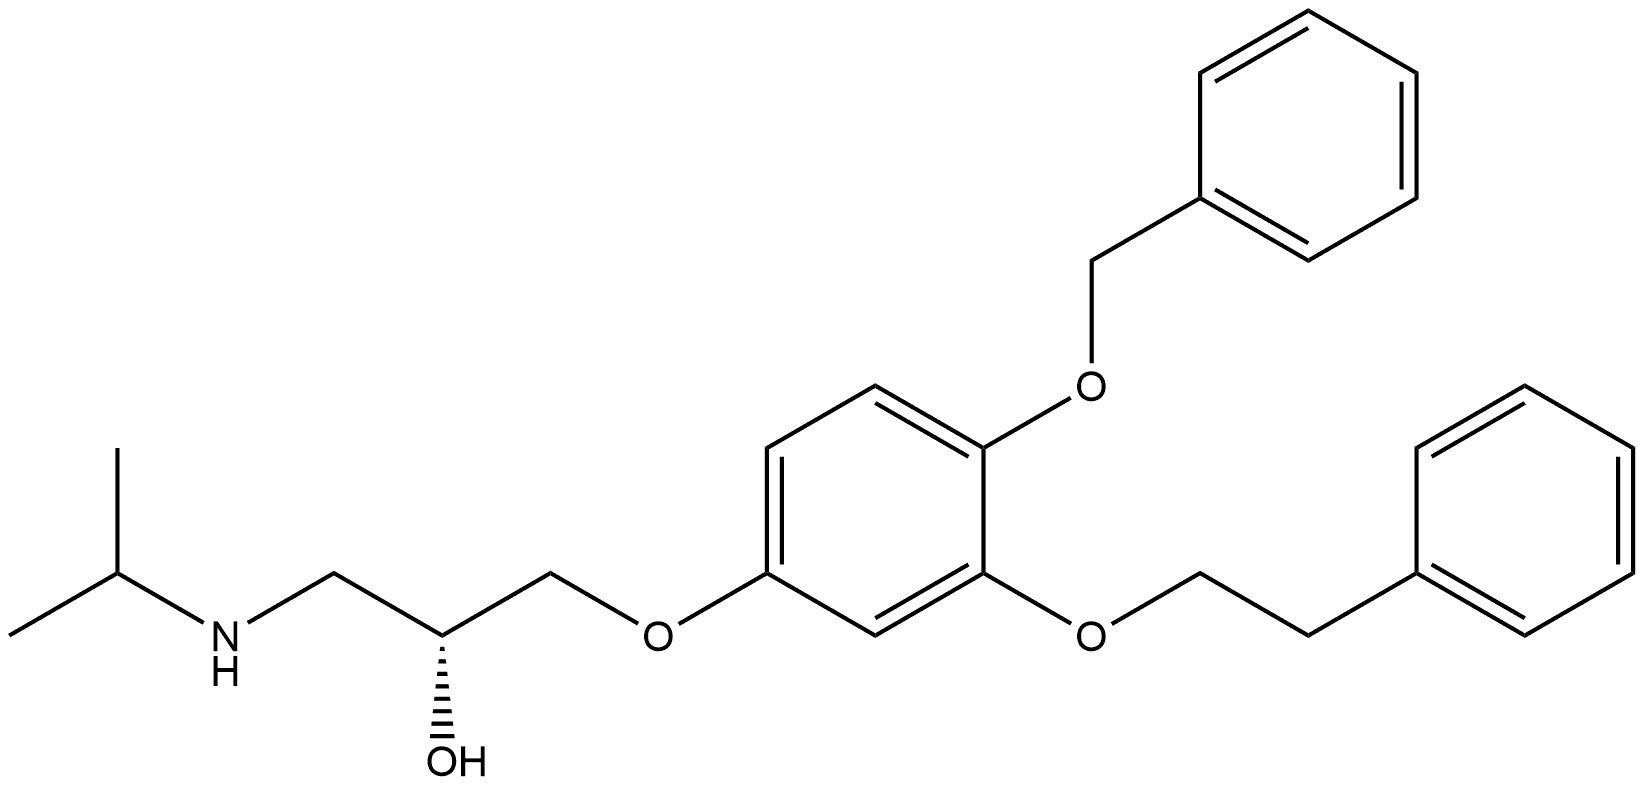 p62-ZZ ligand YOK-1304 Struktur